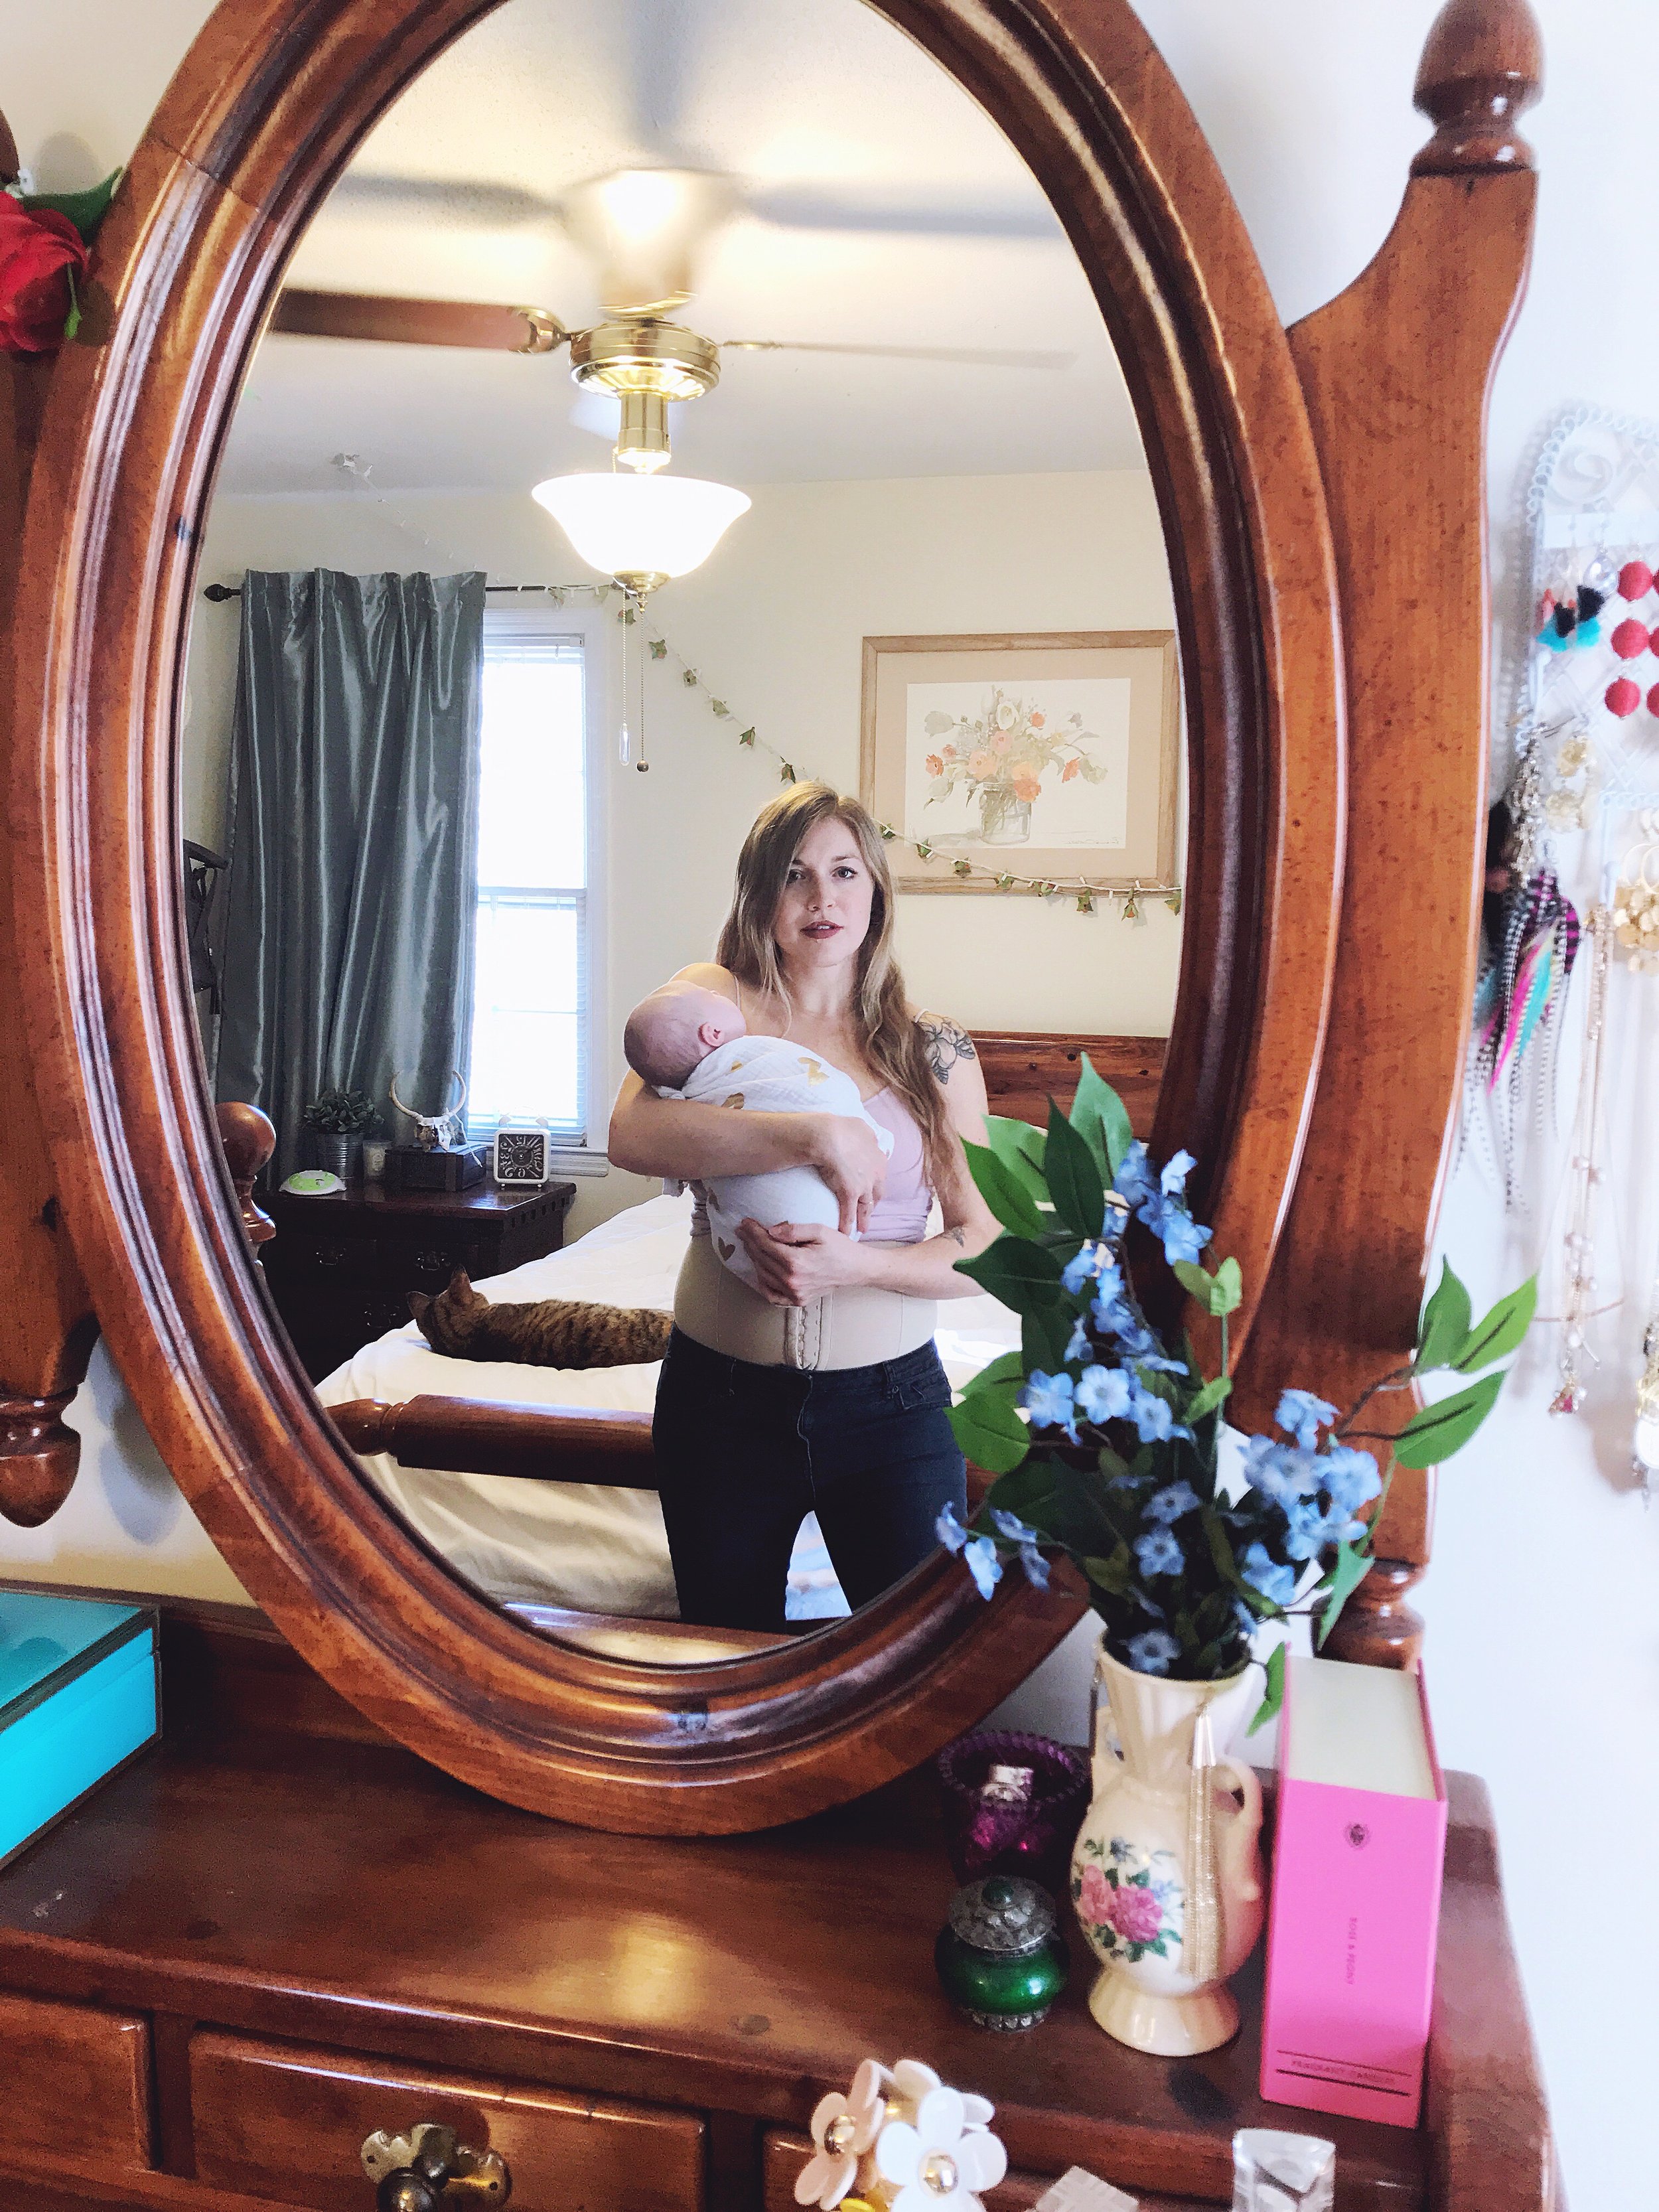 Bellefit Postpartum Corset Review — Value Minded Mama